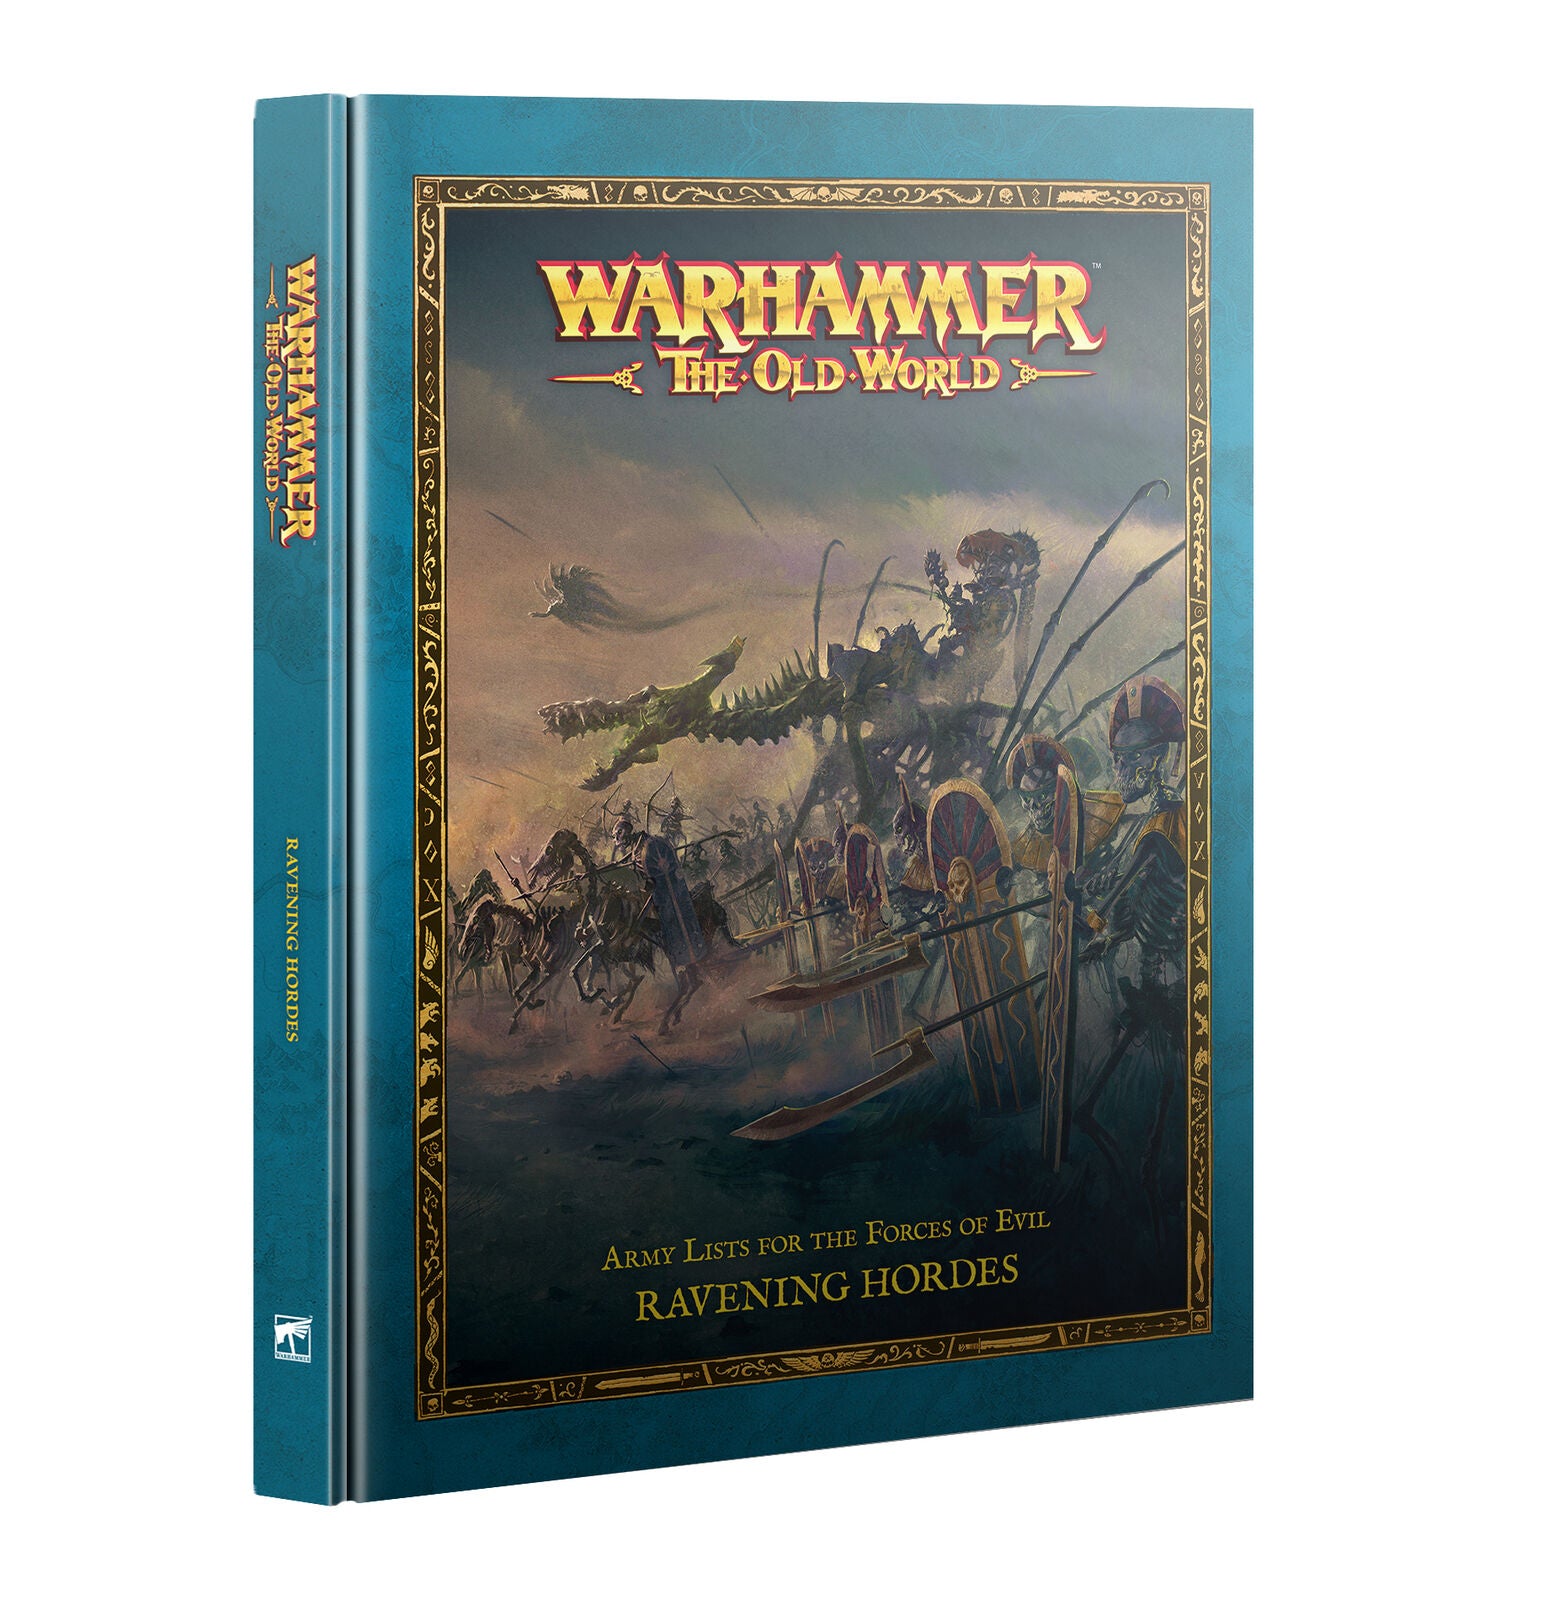 Warhammer: the Old World – Ravening Hordes Book